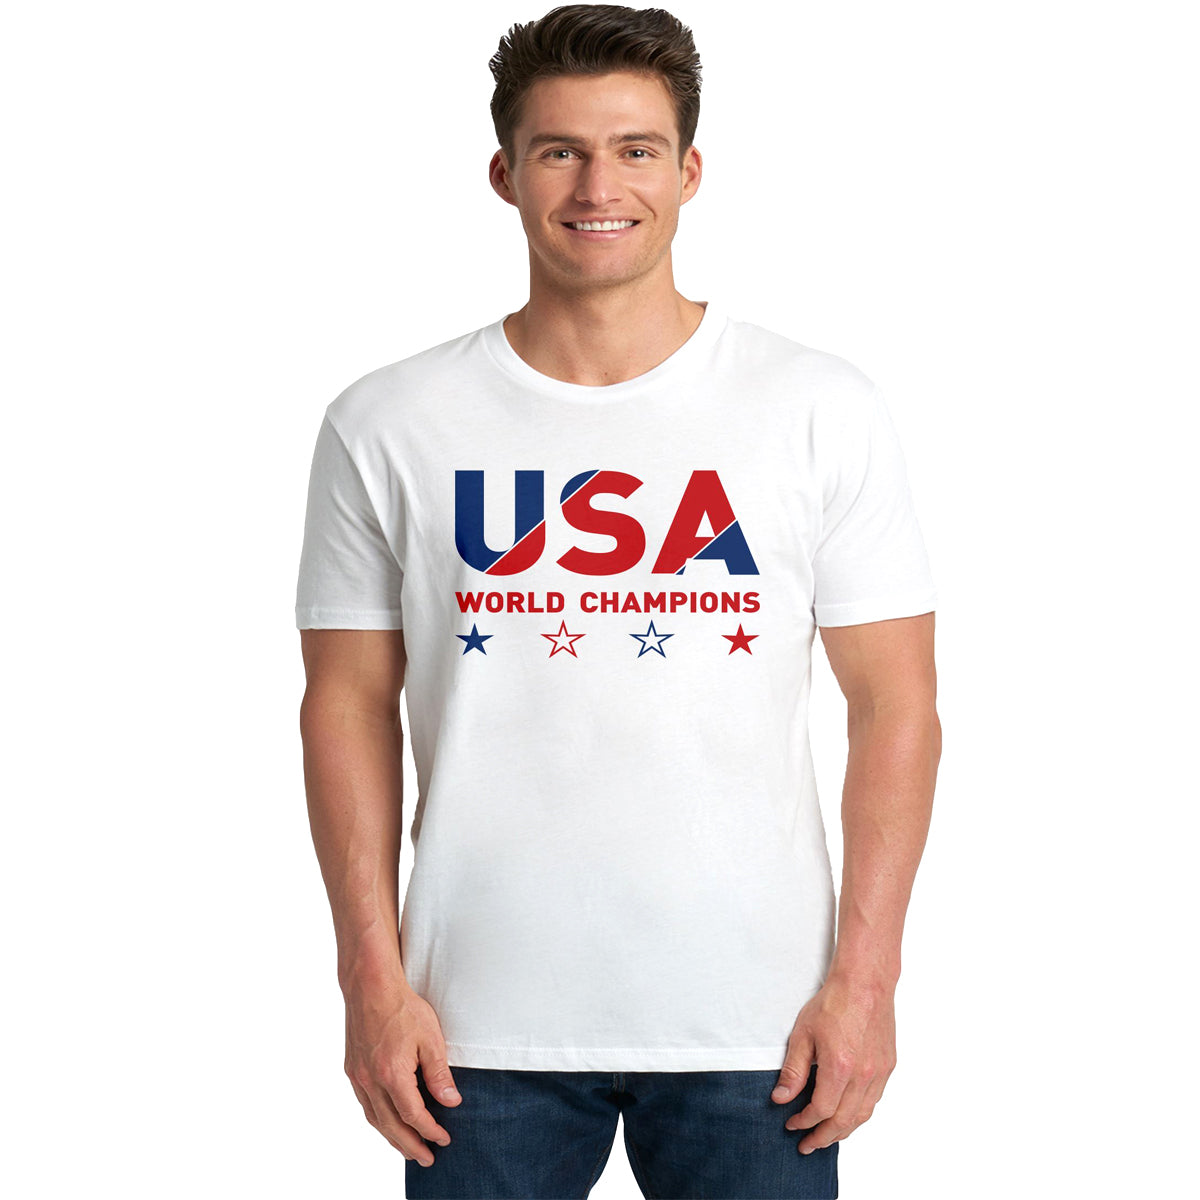 USA World Cup 2019 Champions Shirt T-shirts 411 Youth Medium White Youth